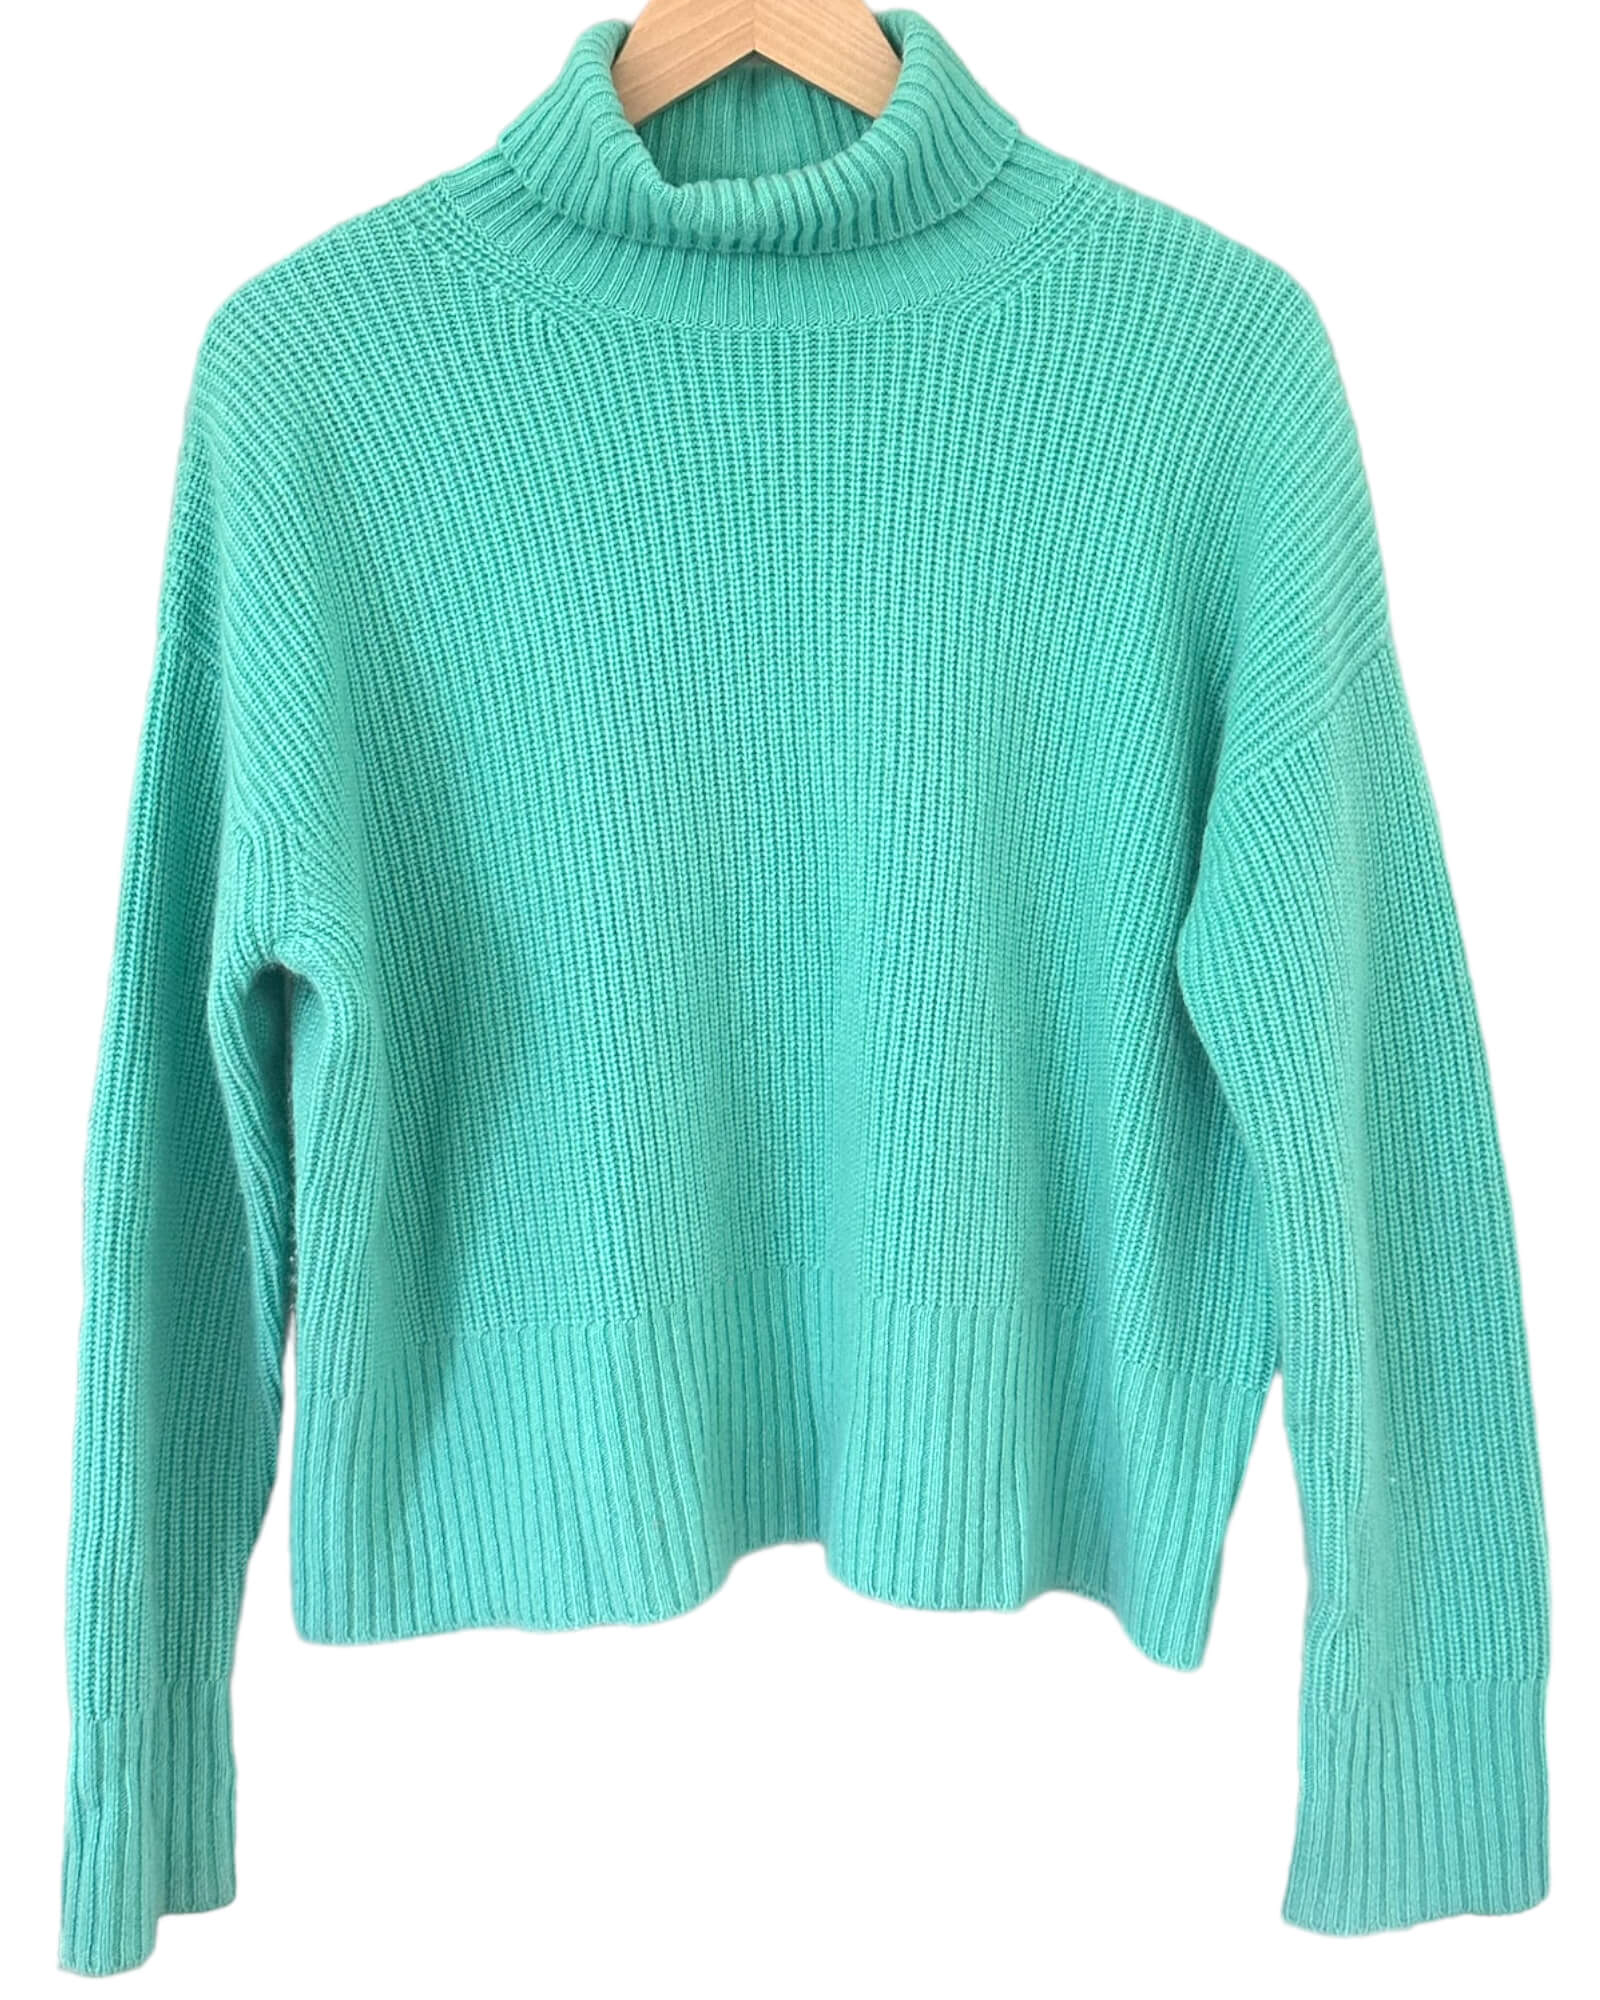 Cool Summer GOBI rivulet green cashmere turtleneck sweater